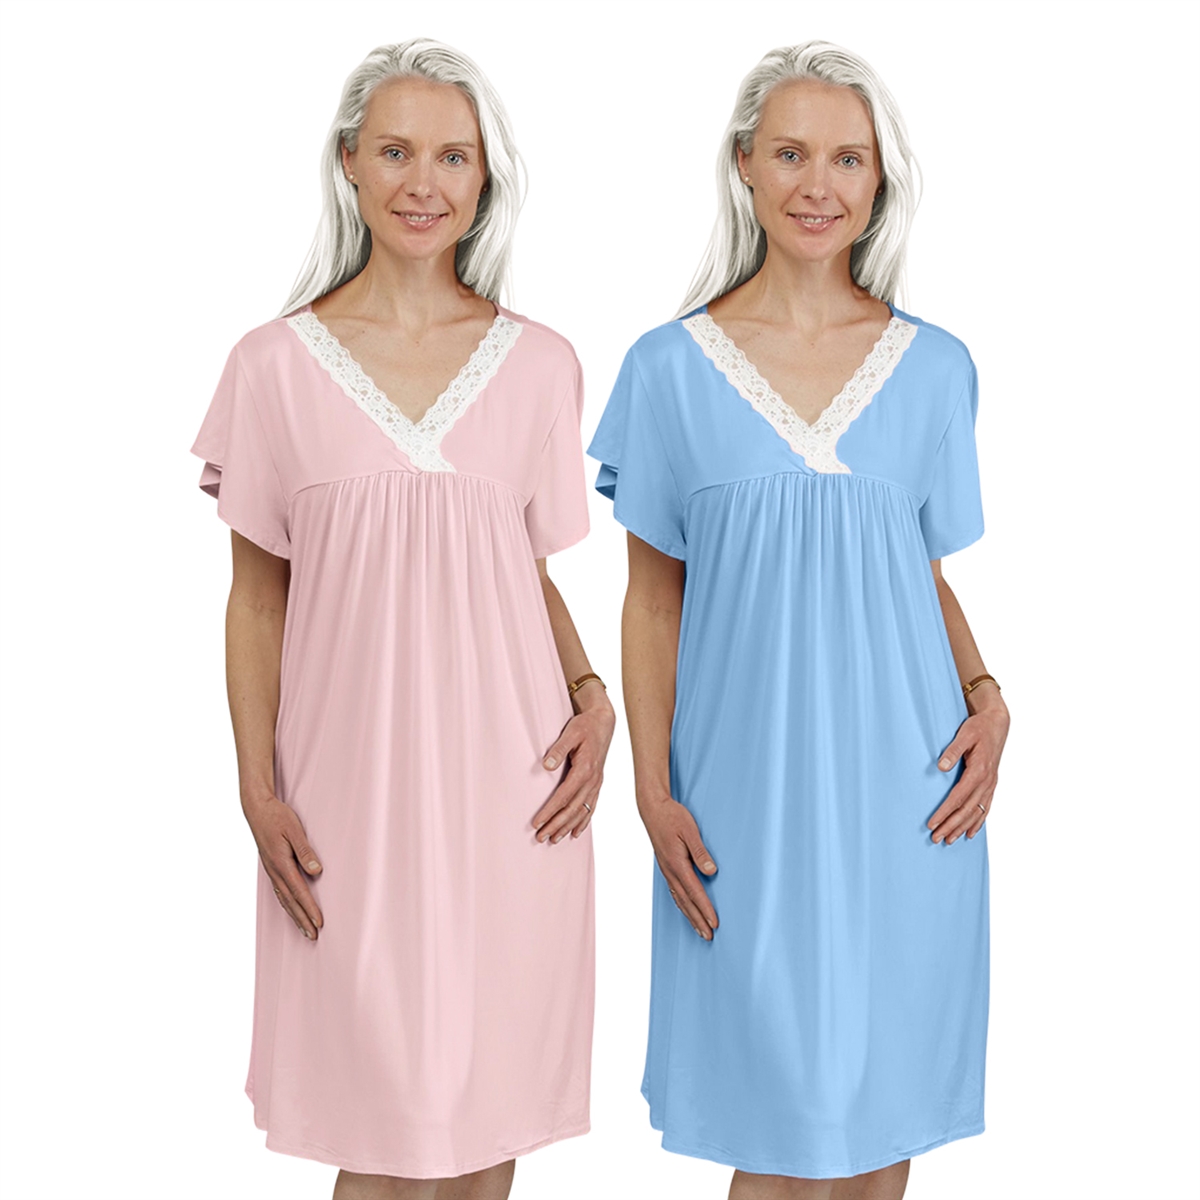 mature women nightdress | mature women nightwear - YouTube